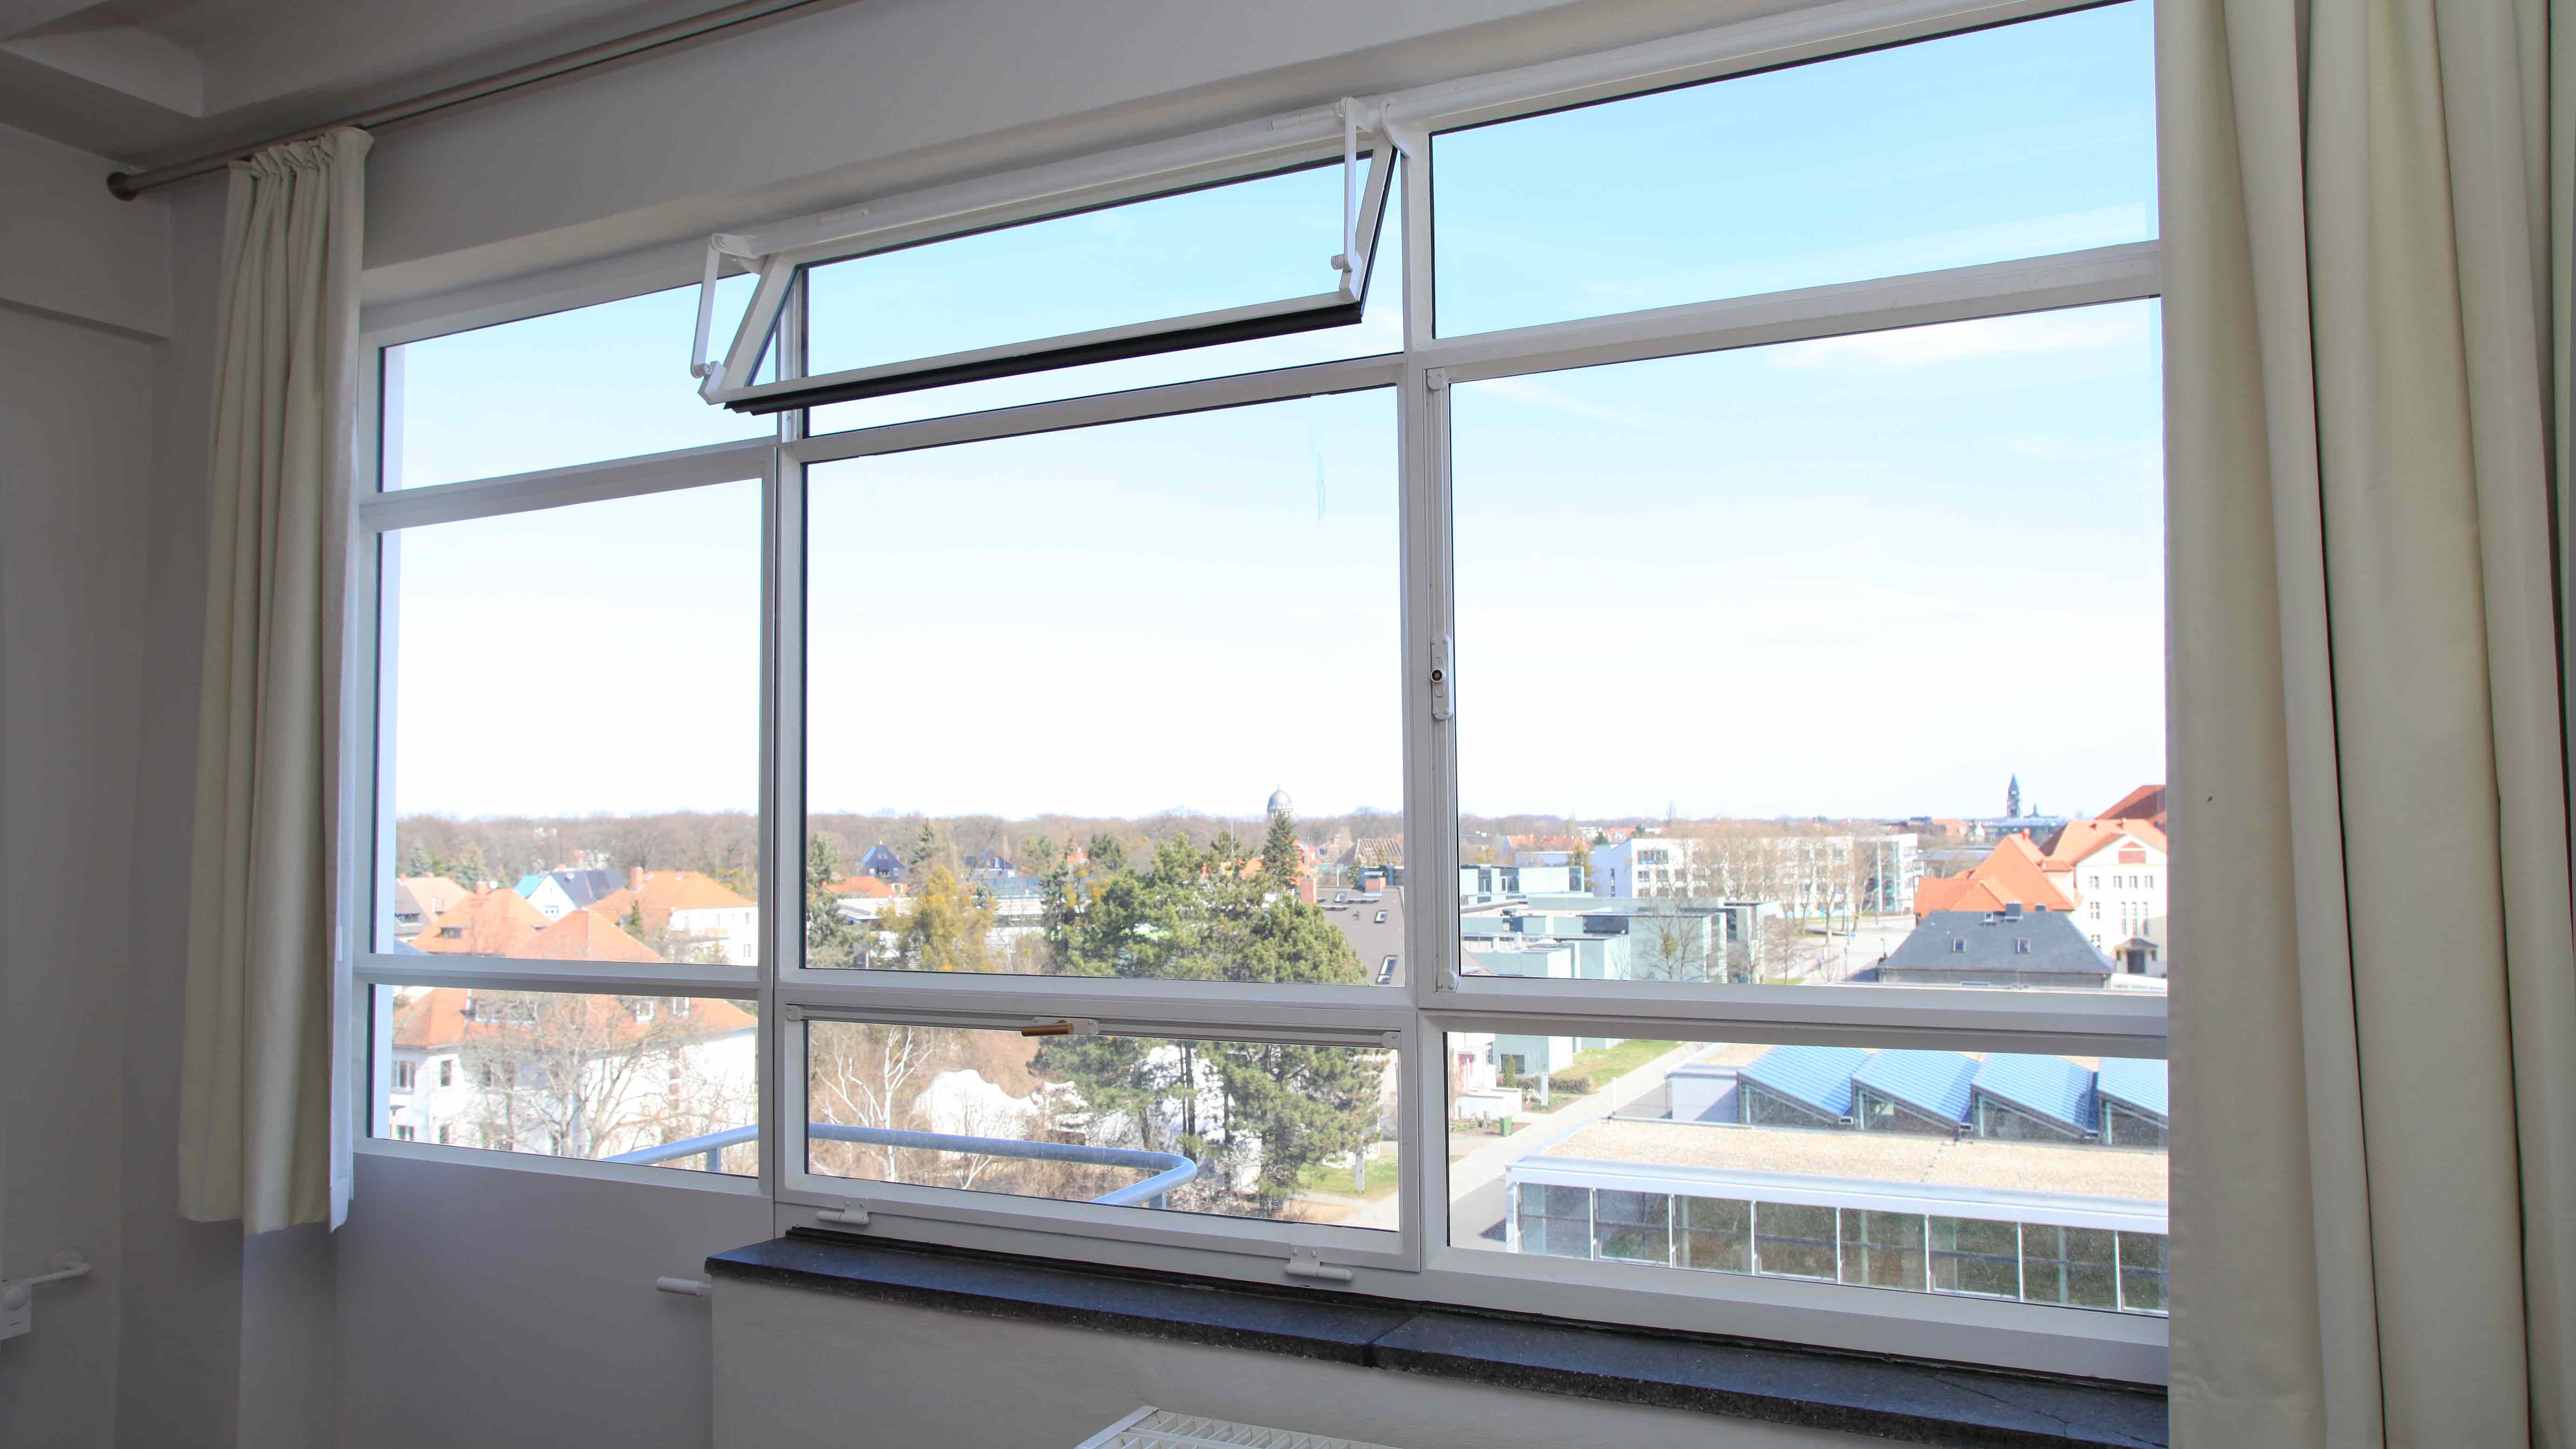 Bauhaus Dessau Atelier building with steel glazed windows